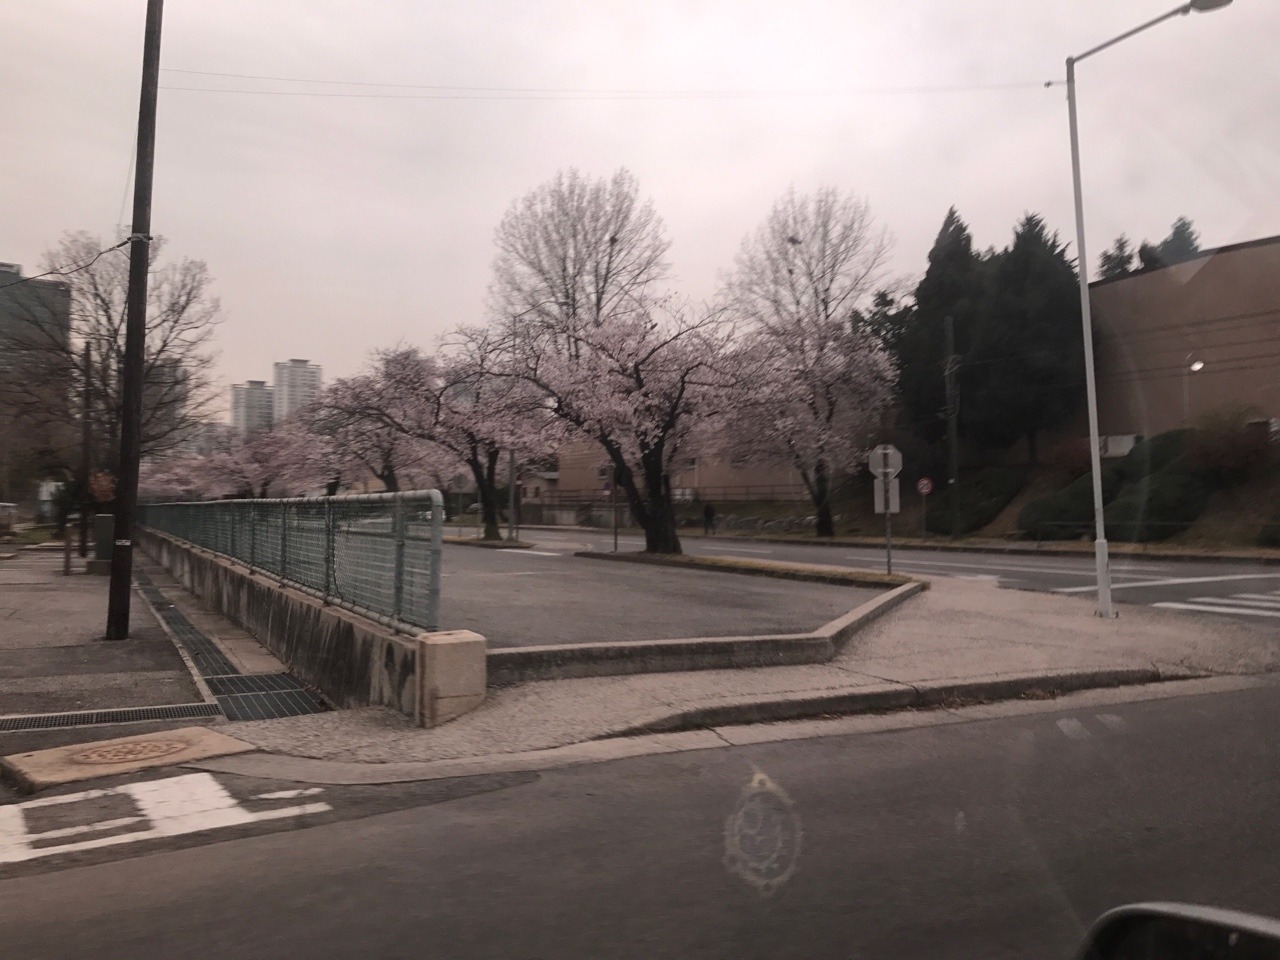 Cherry blossoms in Yongsan